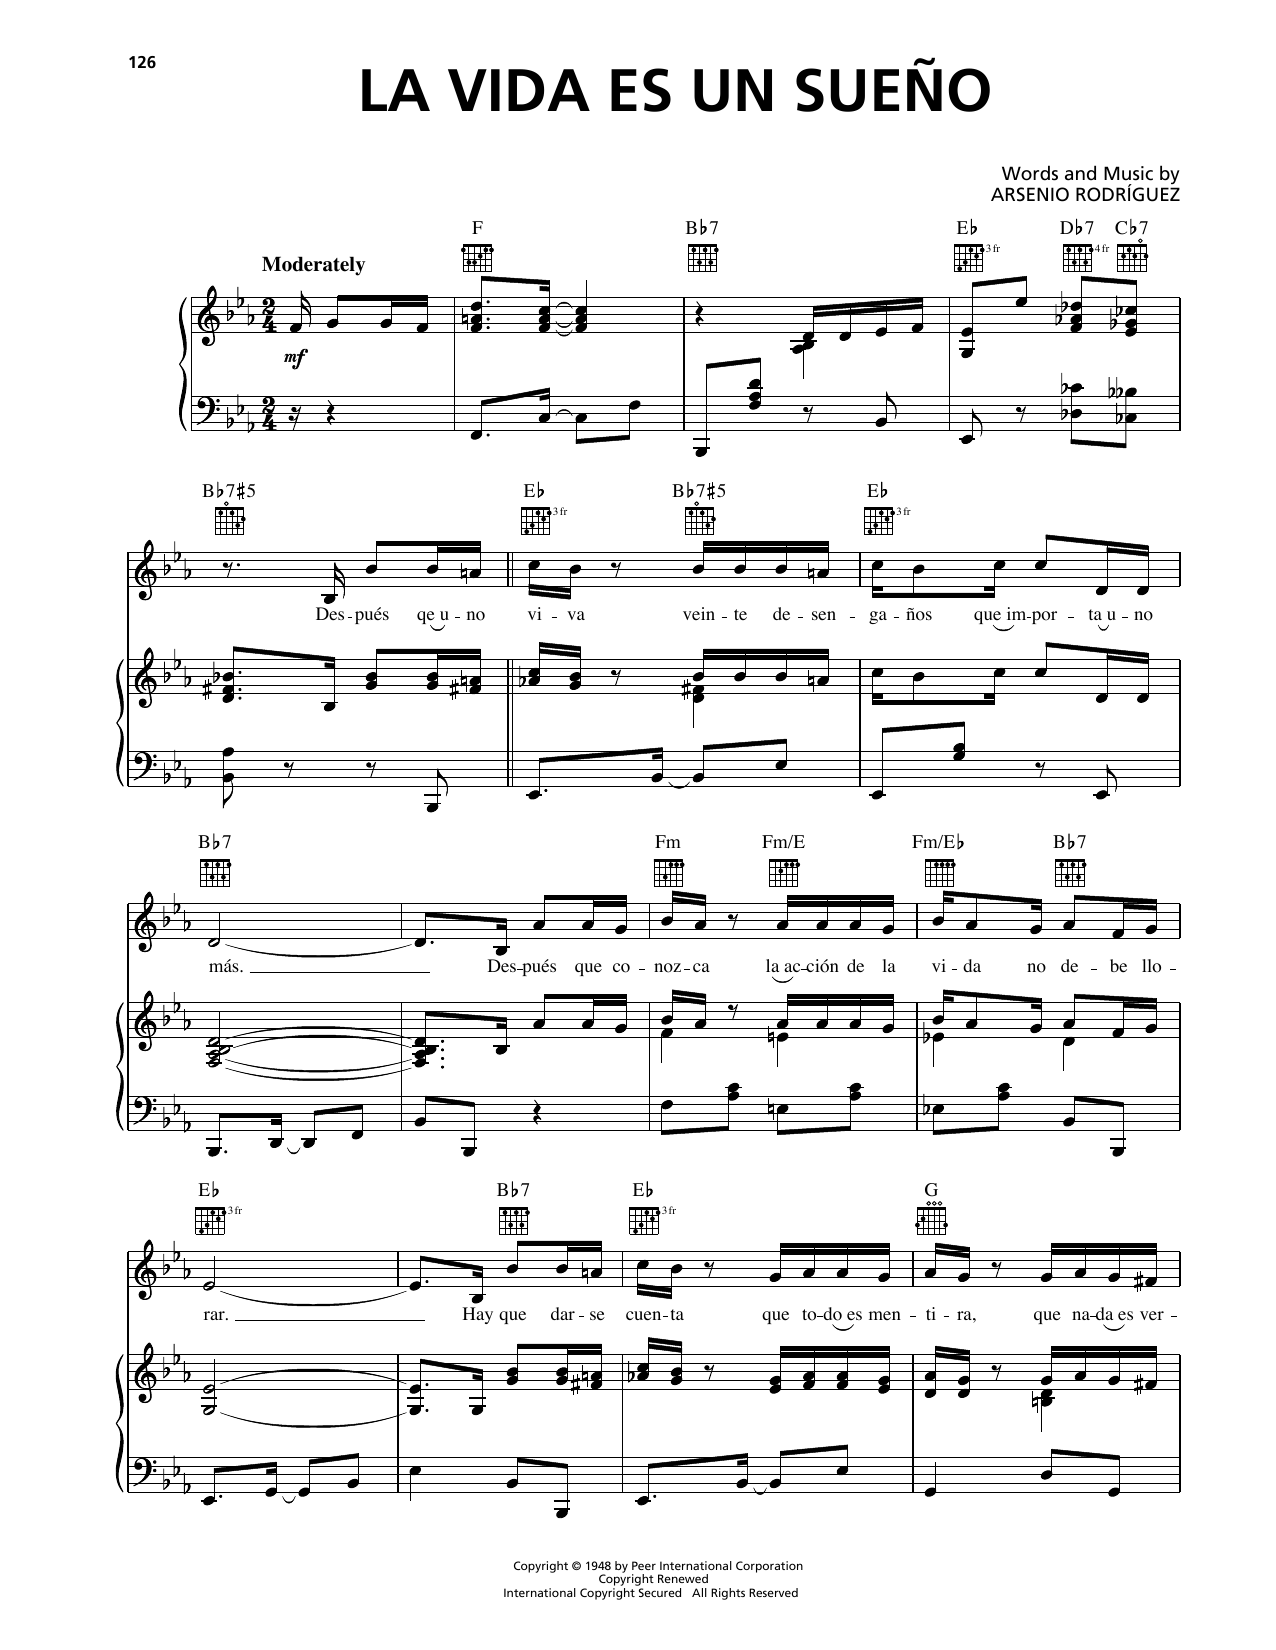 Arsenio Rodriguez La Vida Es Un Sueno Sheet Music Notes & Chords for Piano, Vocal & Guitar Chords (Right-Hand Melody) - Download or Print PDF